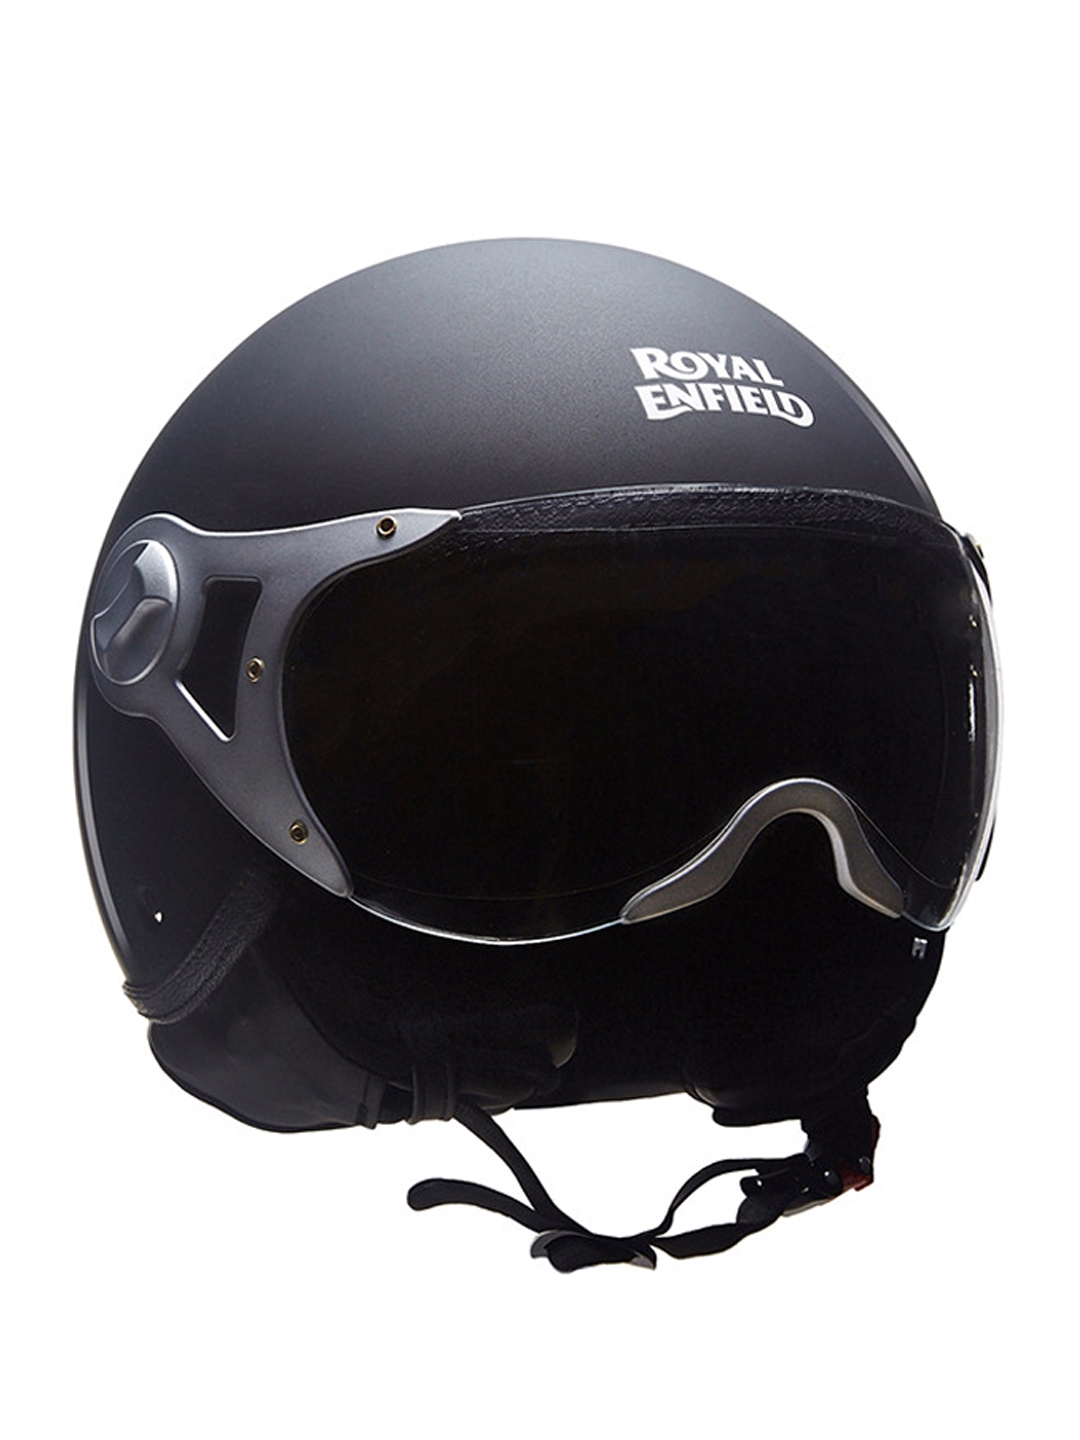 Roadster vintage leather aviator helmets